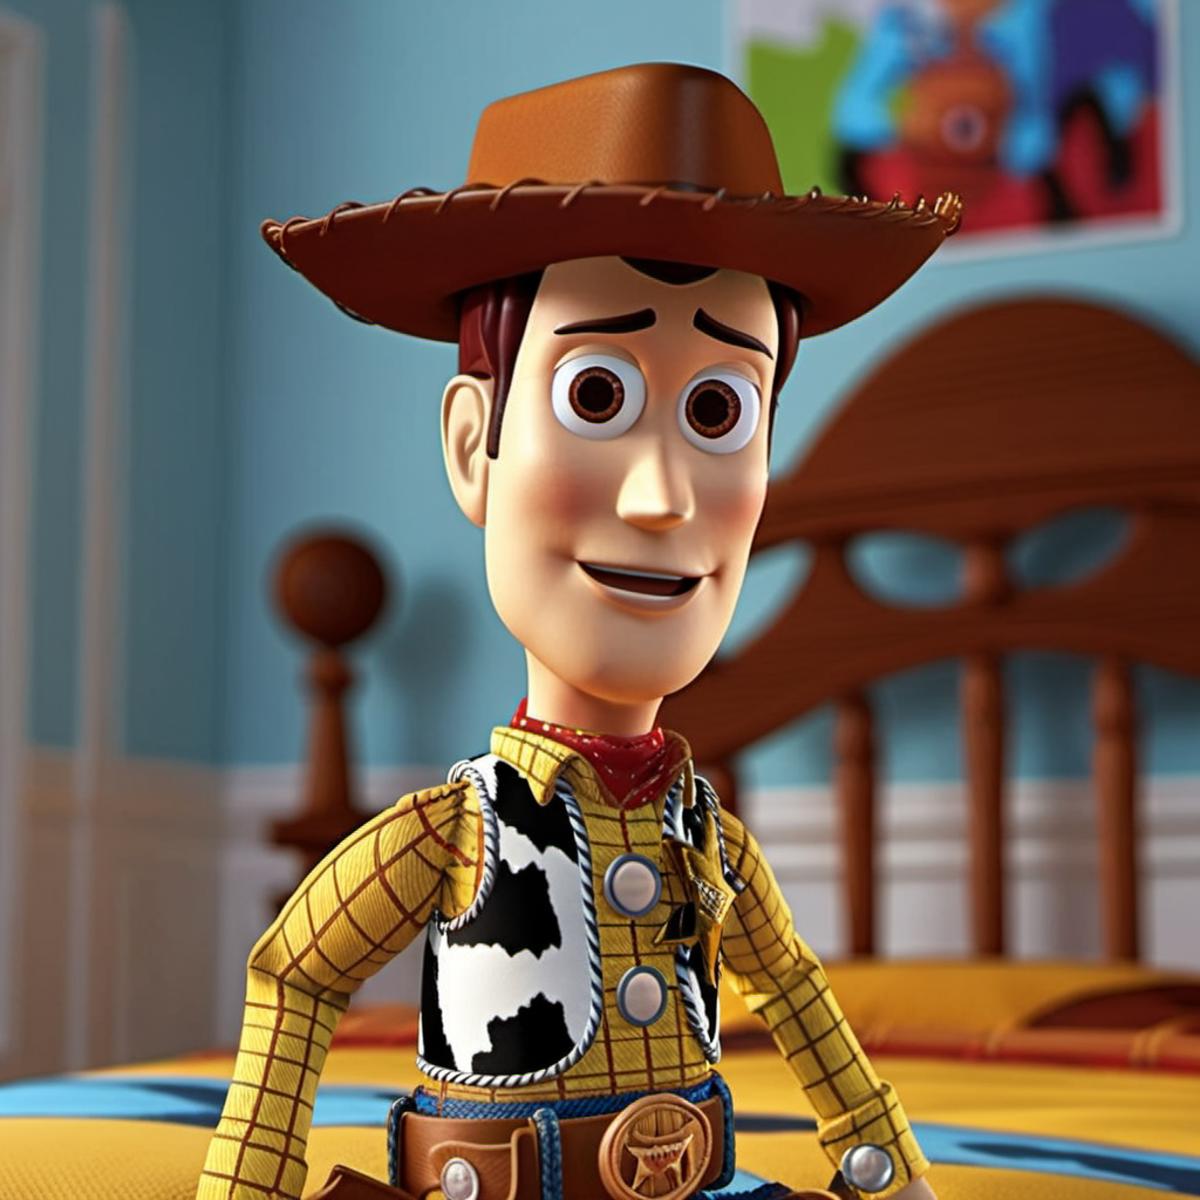 Sheriff Woody - Toy Story - SDXL image by PhotobAIt